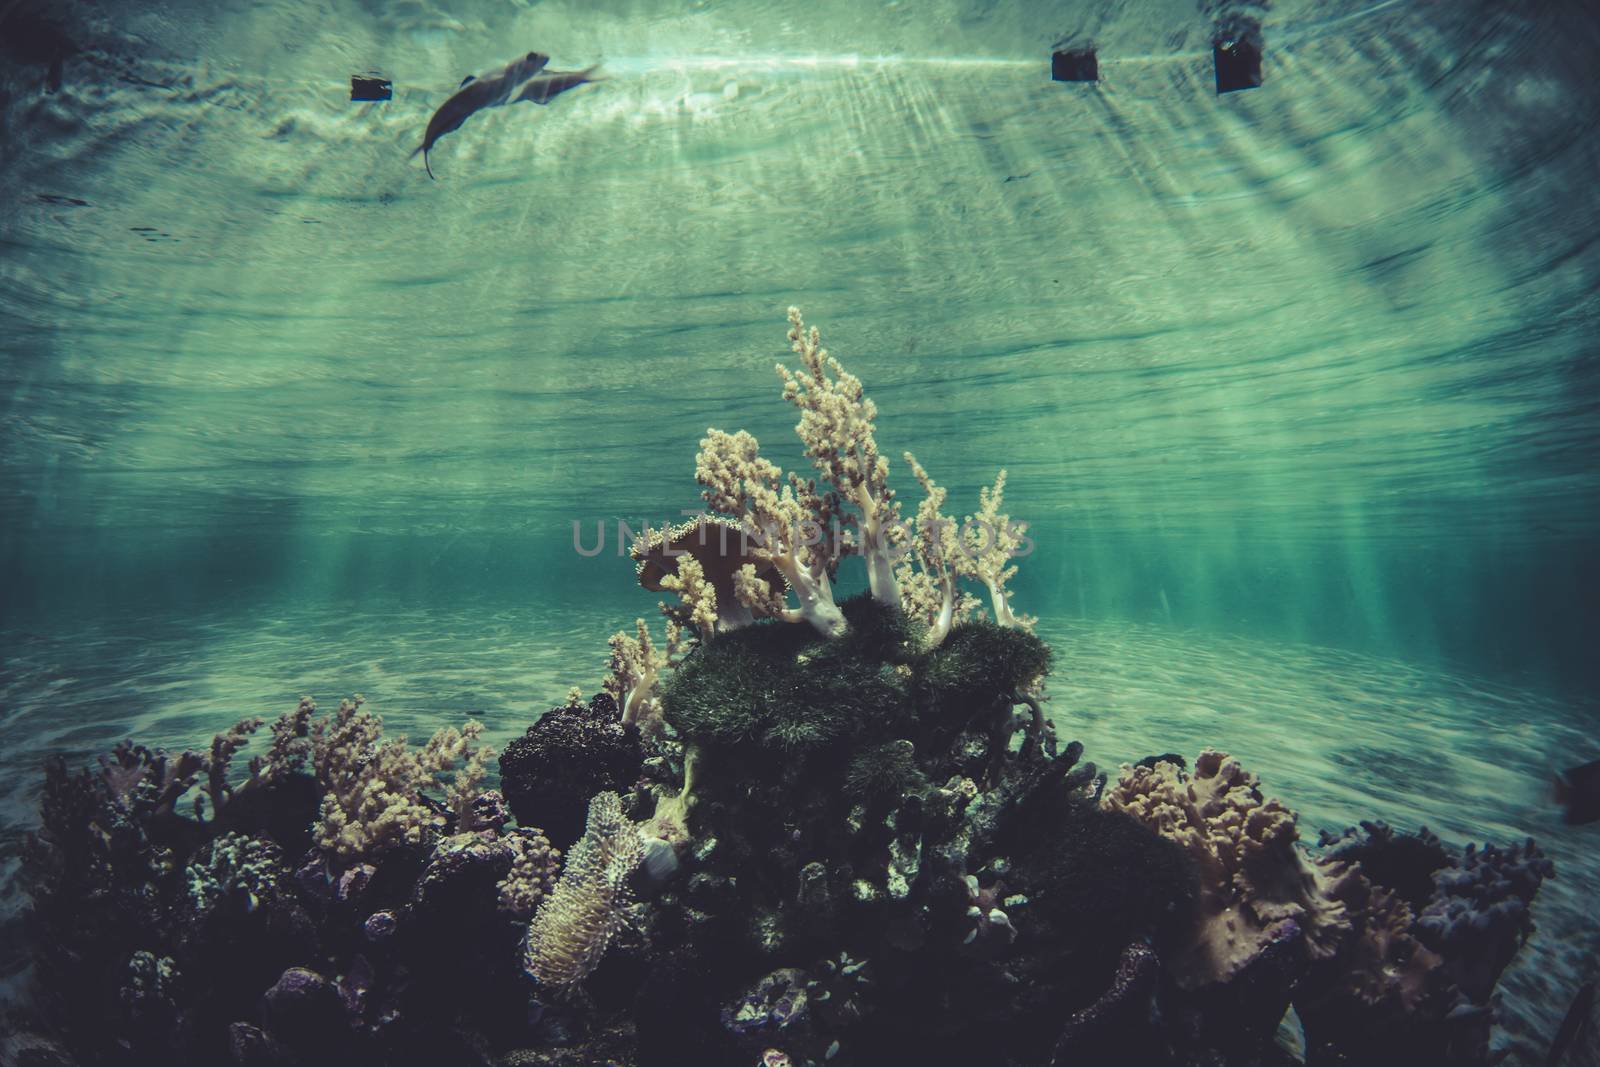 sponge, small coral reef ecosystem by FernandoCortes